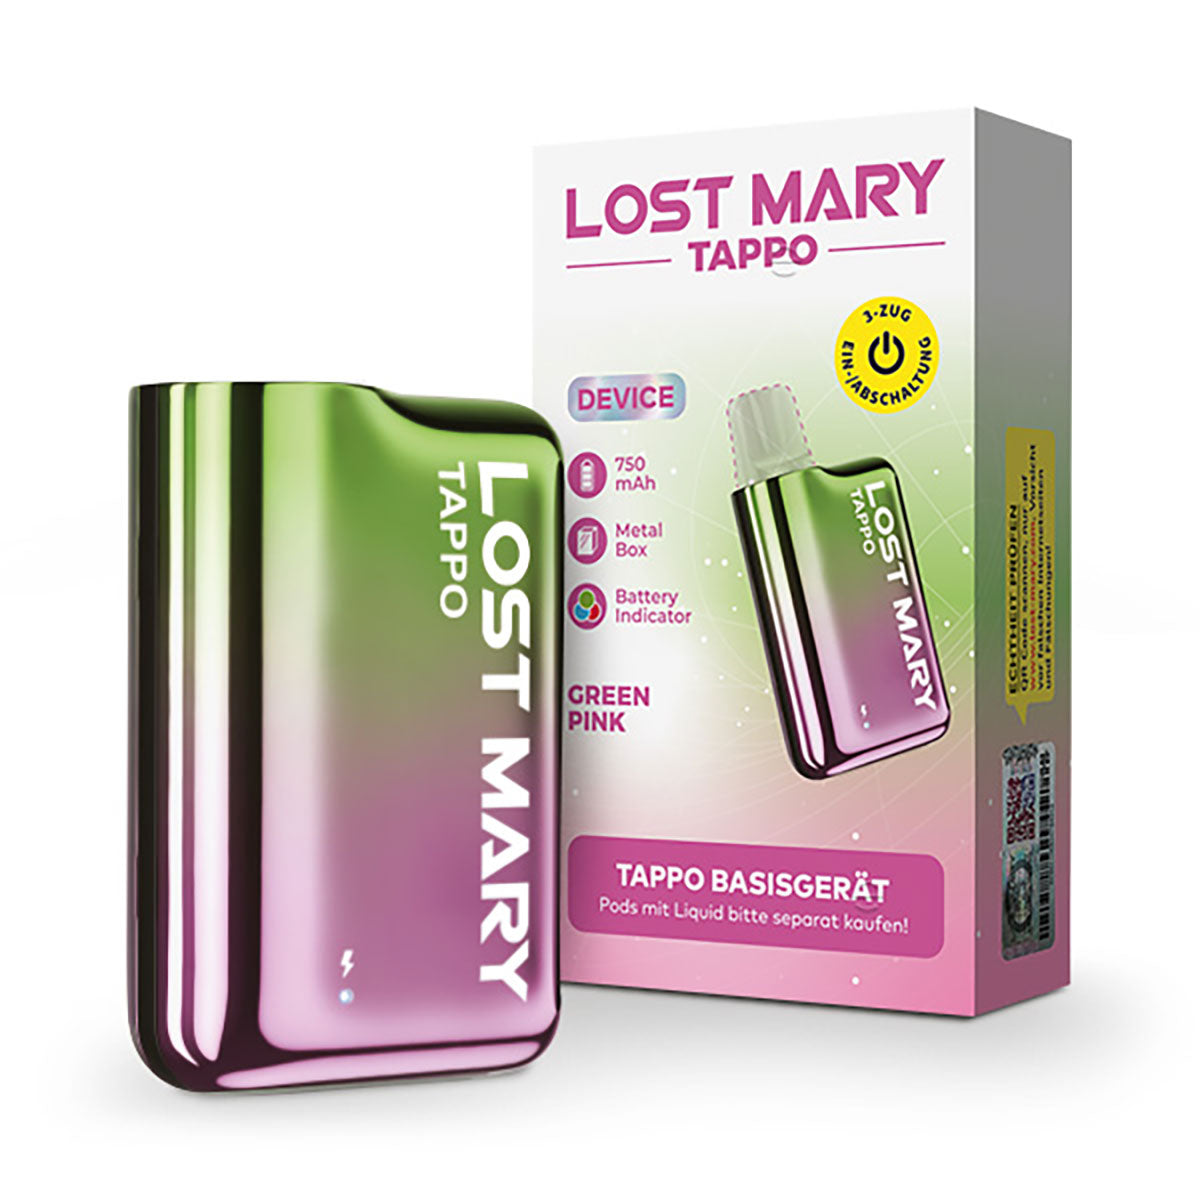 Lost Mary Tappo Akkuträger / Basisgerät